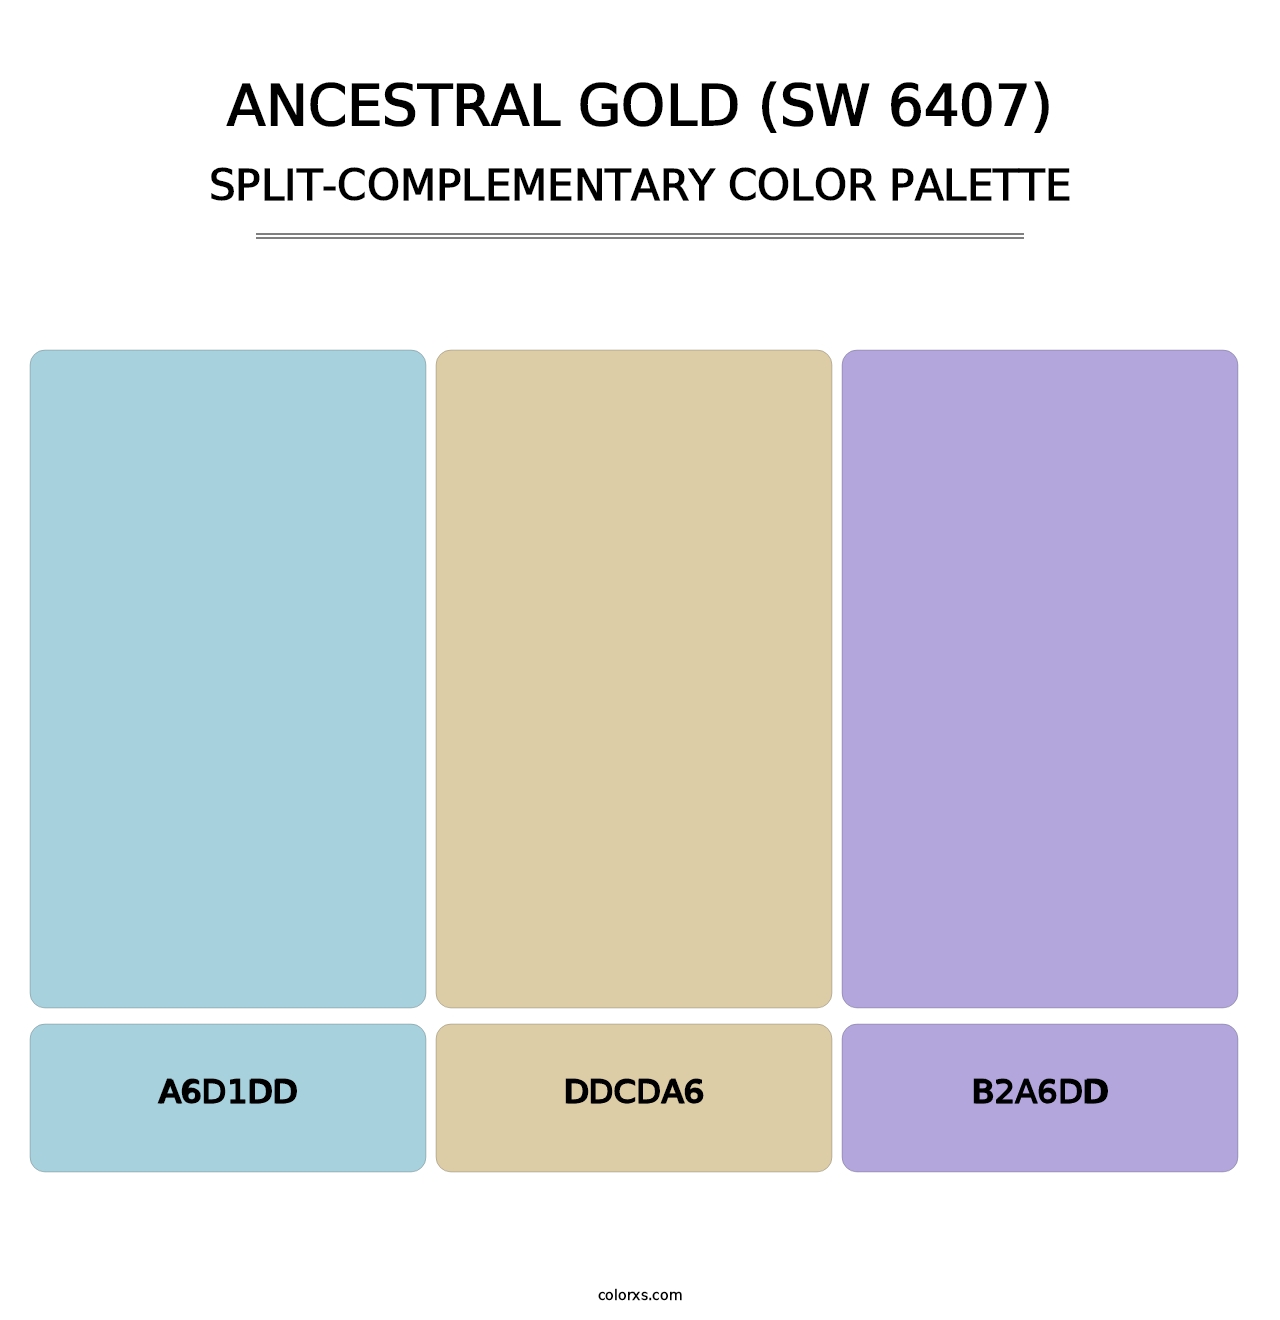 Ancestral Gold (SW 6407) - Split-Complementary Color Palette